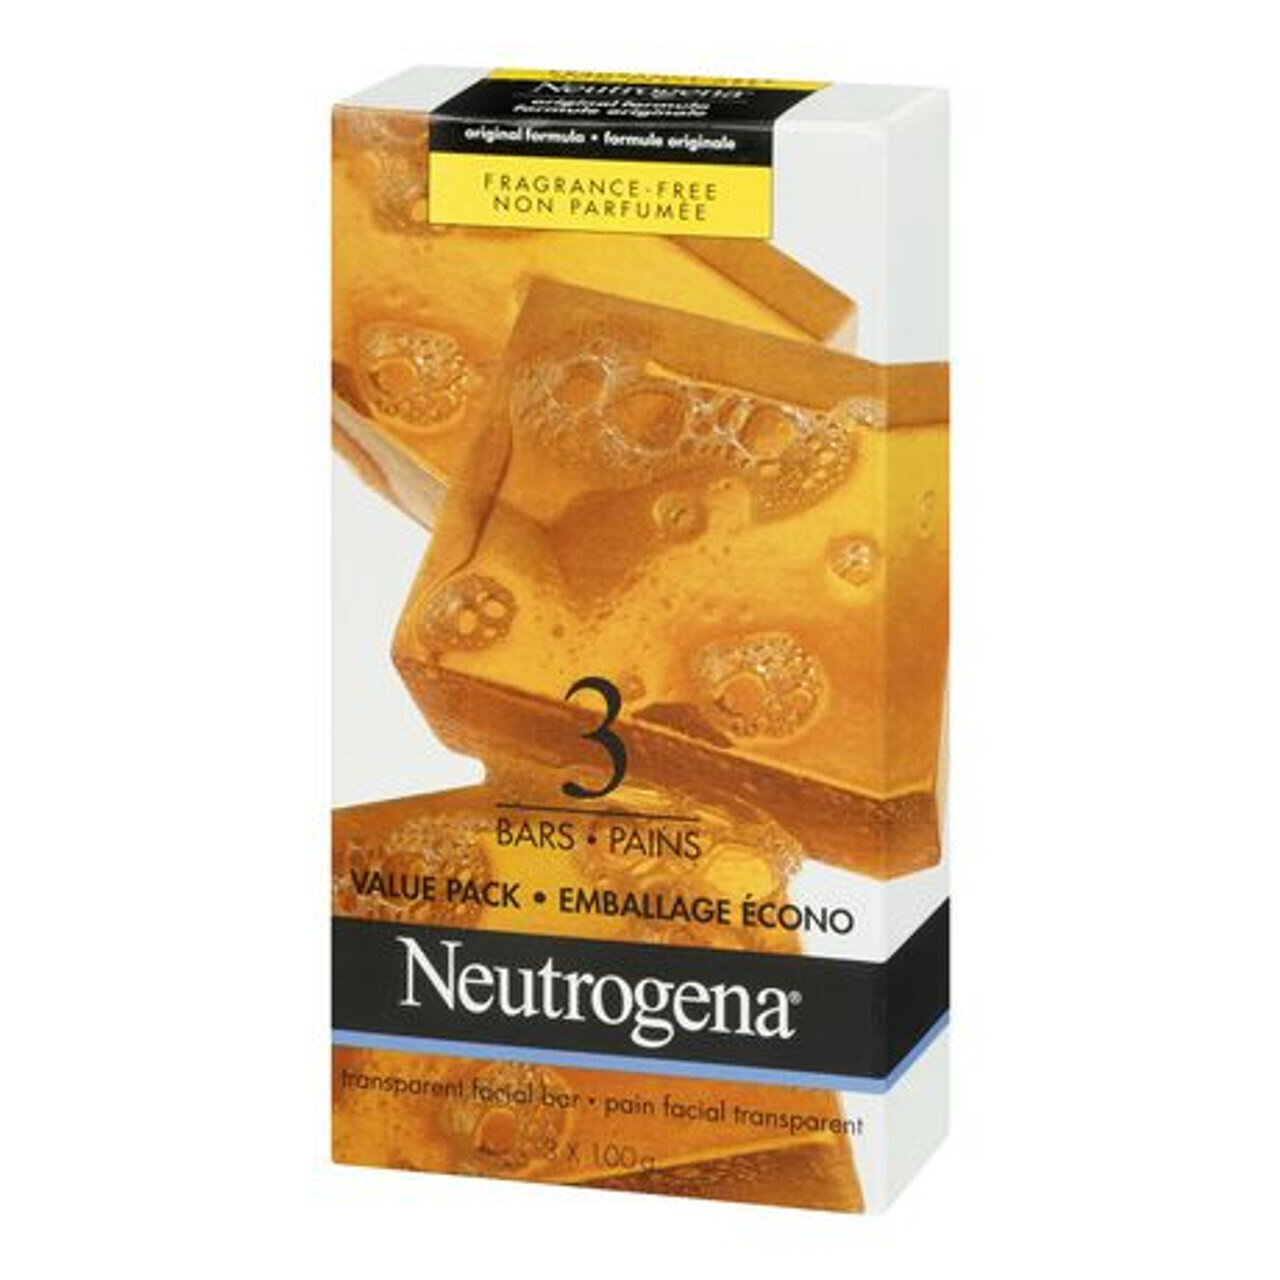 Neutrogena Fragrance Free Original Formula Facial Cleansing Soap Bars, 3